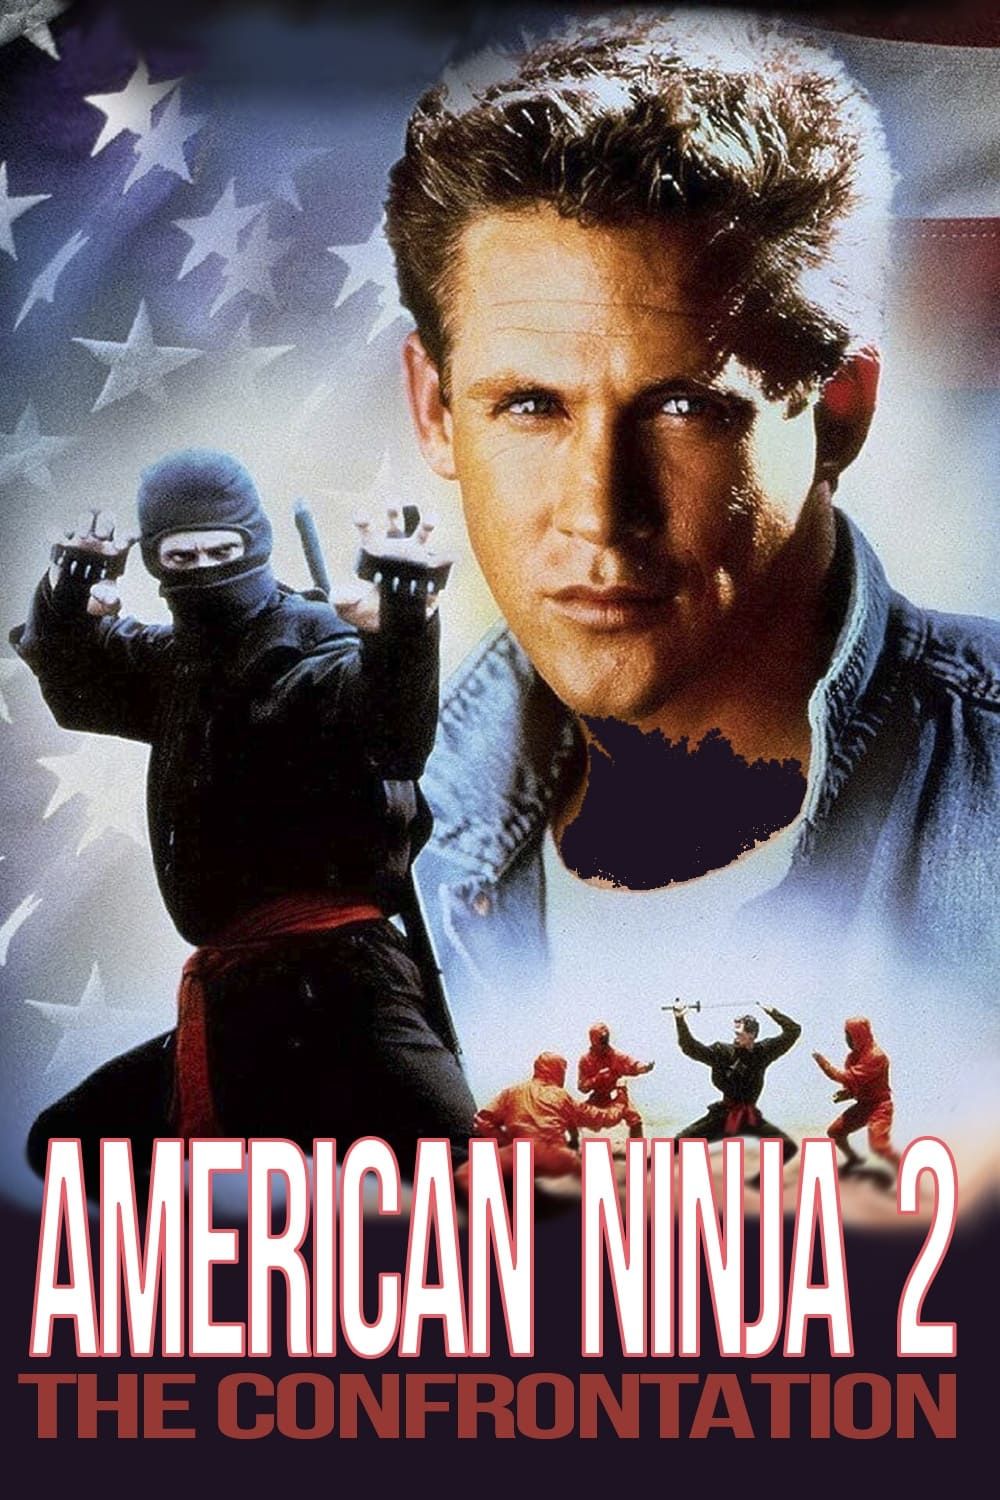 Ninja III: The Domination (1984). — FORCE FIVE